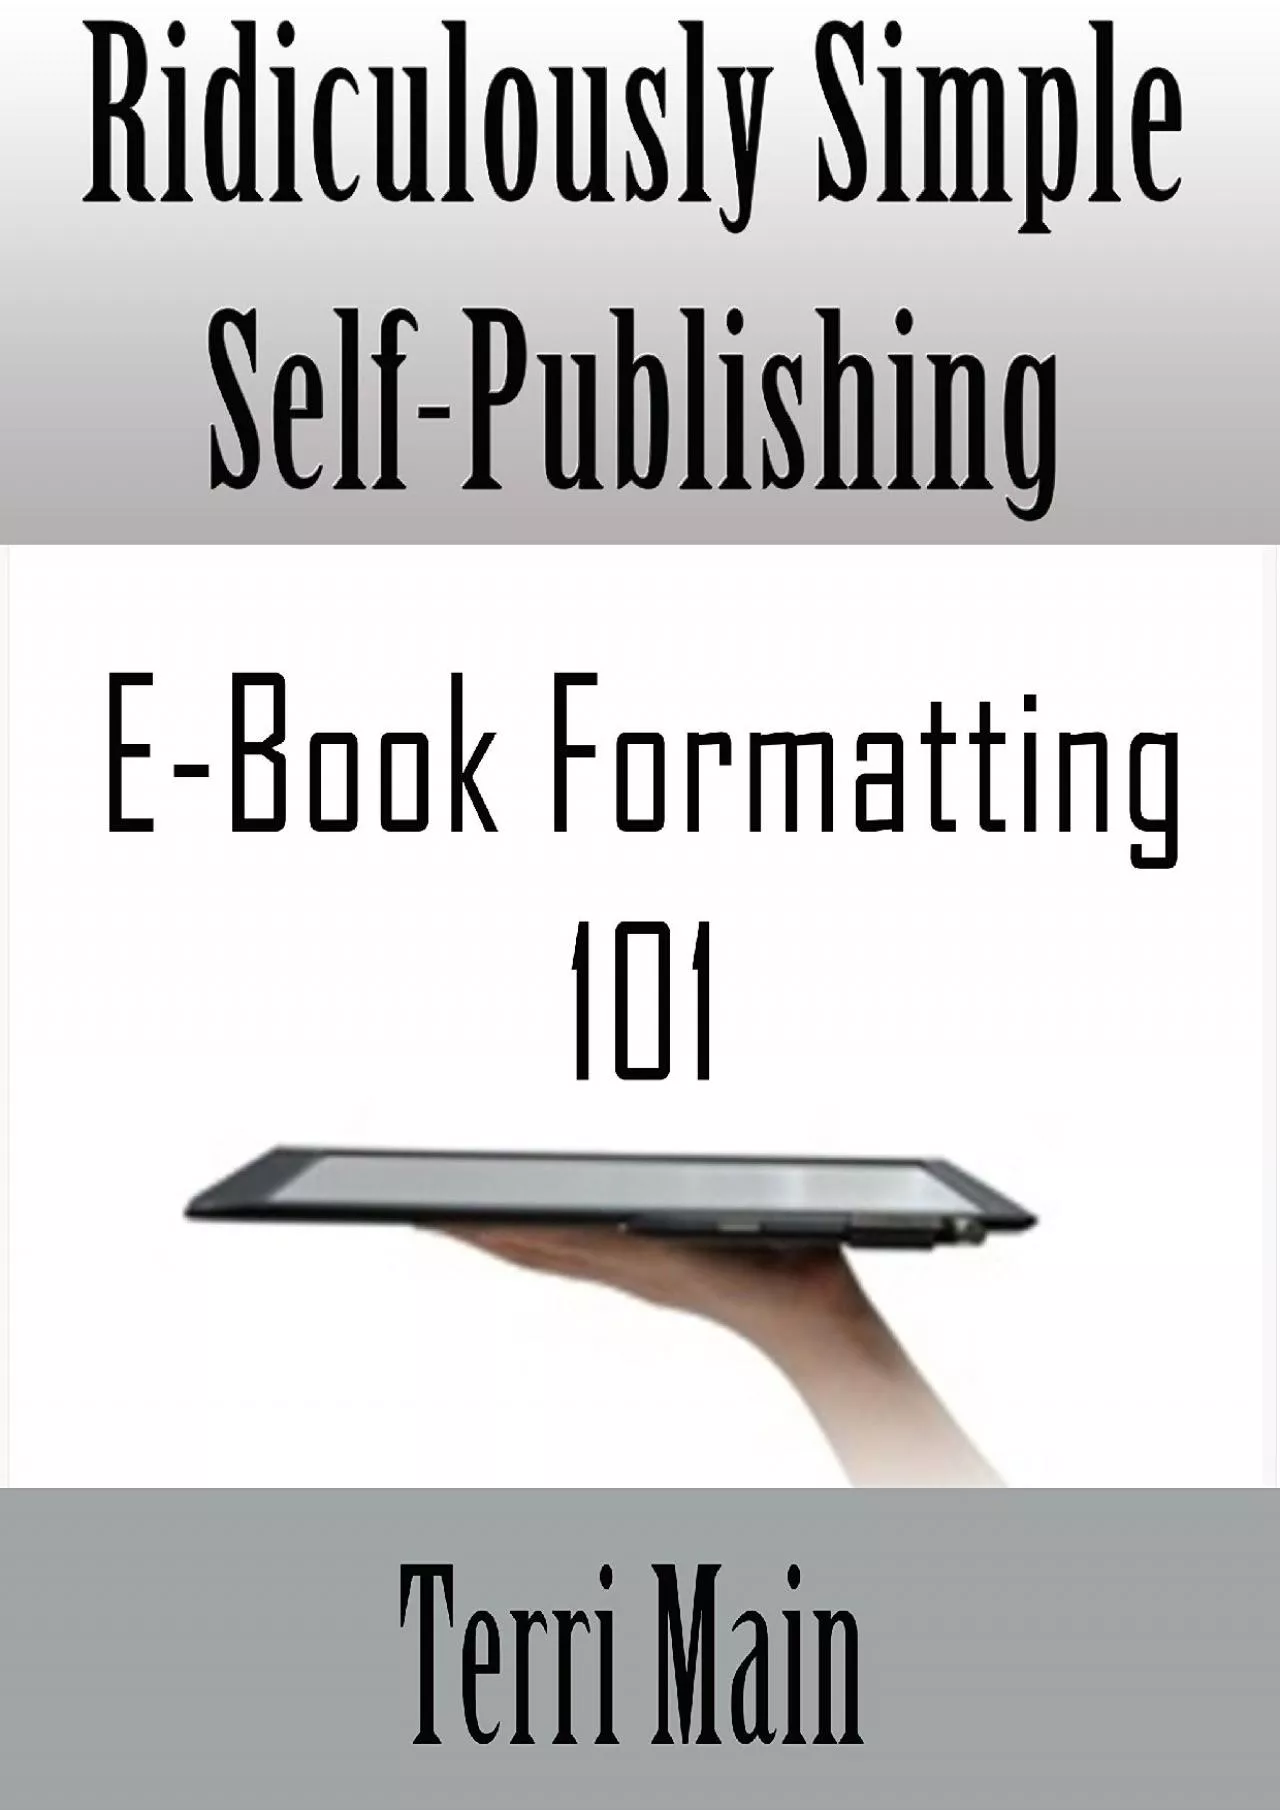 (BOOK)-Ridiculously Simple Self Publishing: E-book Formatting 101 (The Ridiculously Simple